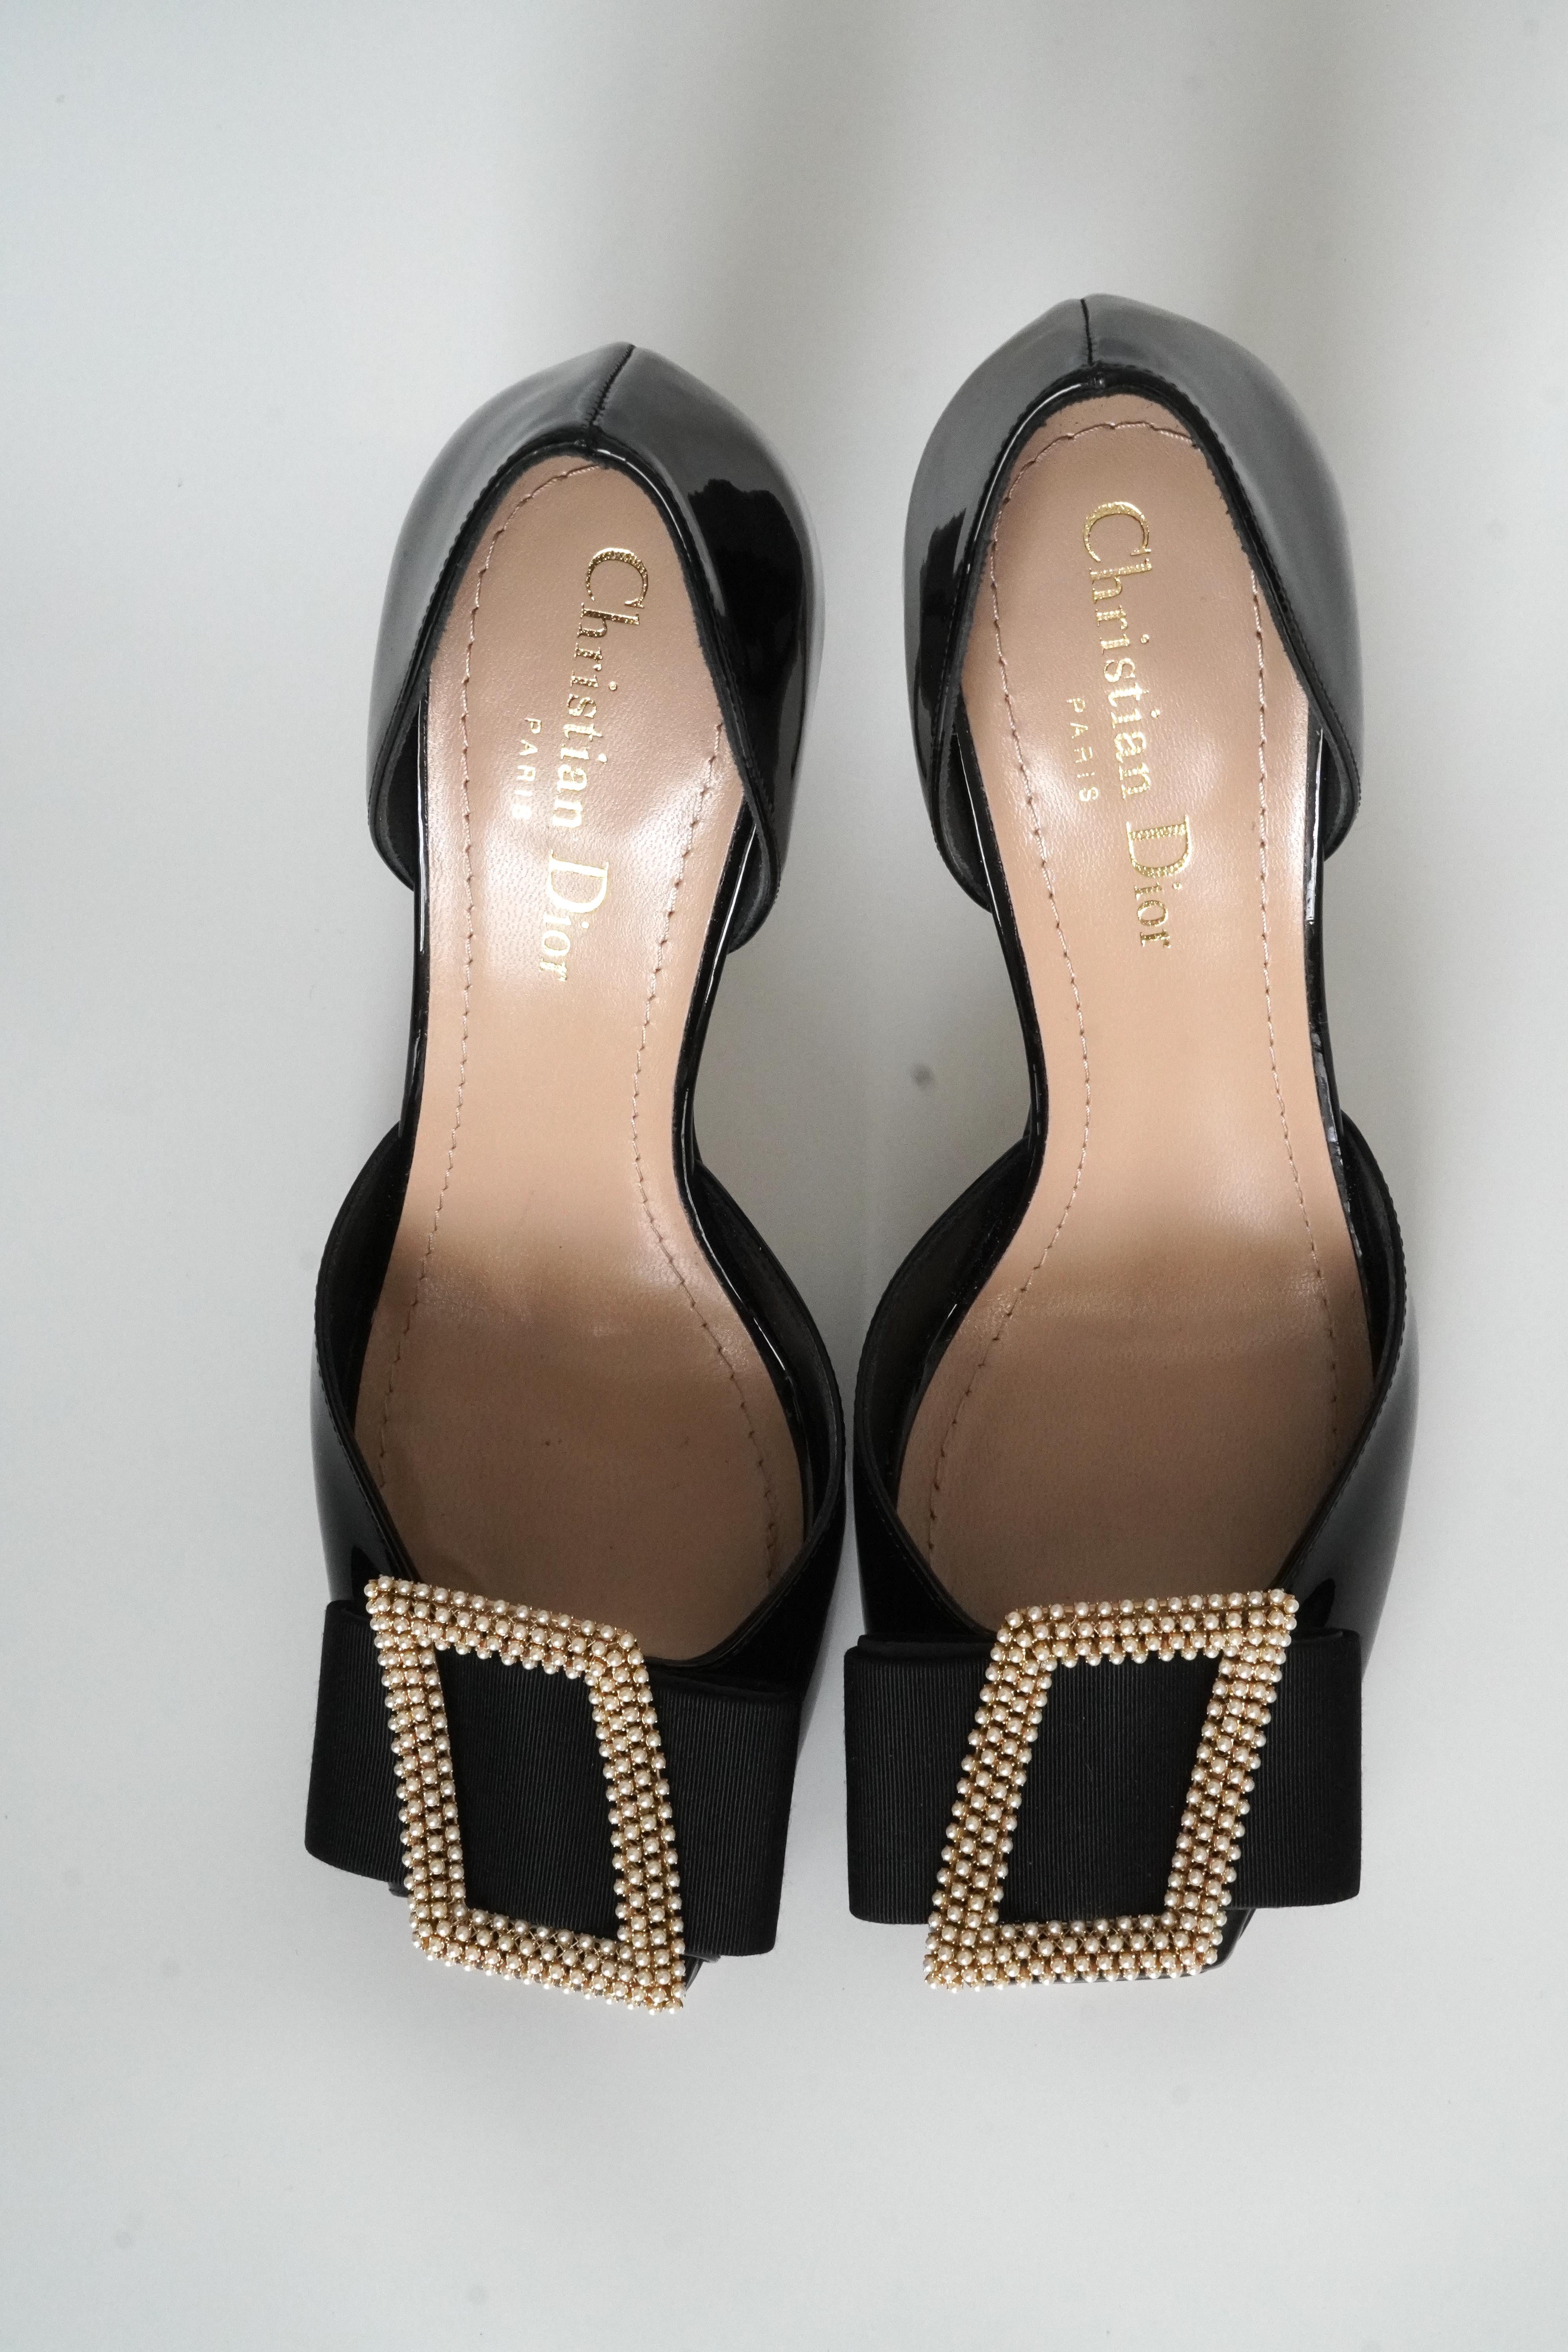 Women's Christian Dior Idylle Black Patent Leather Heeled Sandals sz 38.5